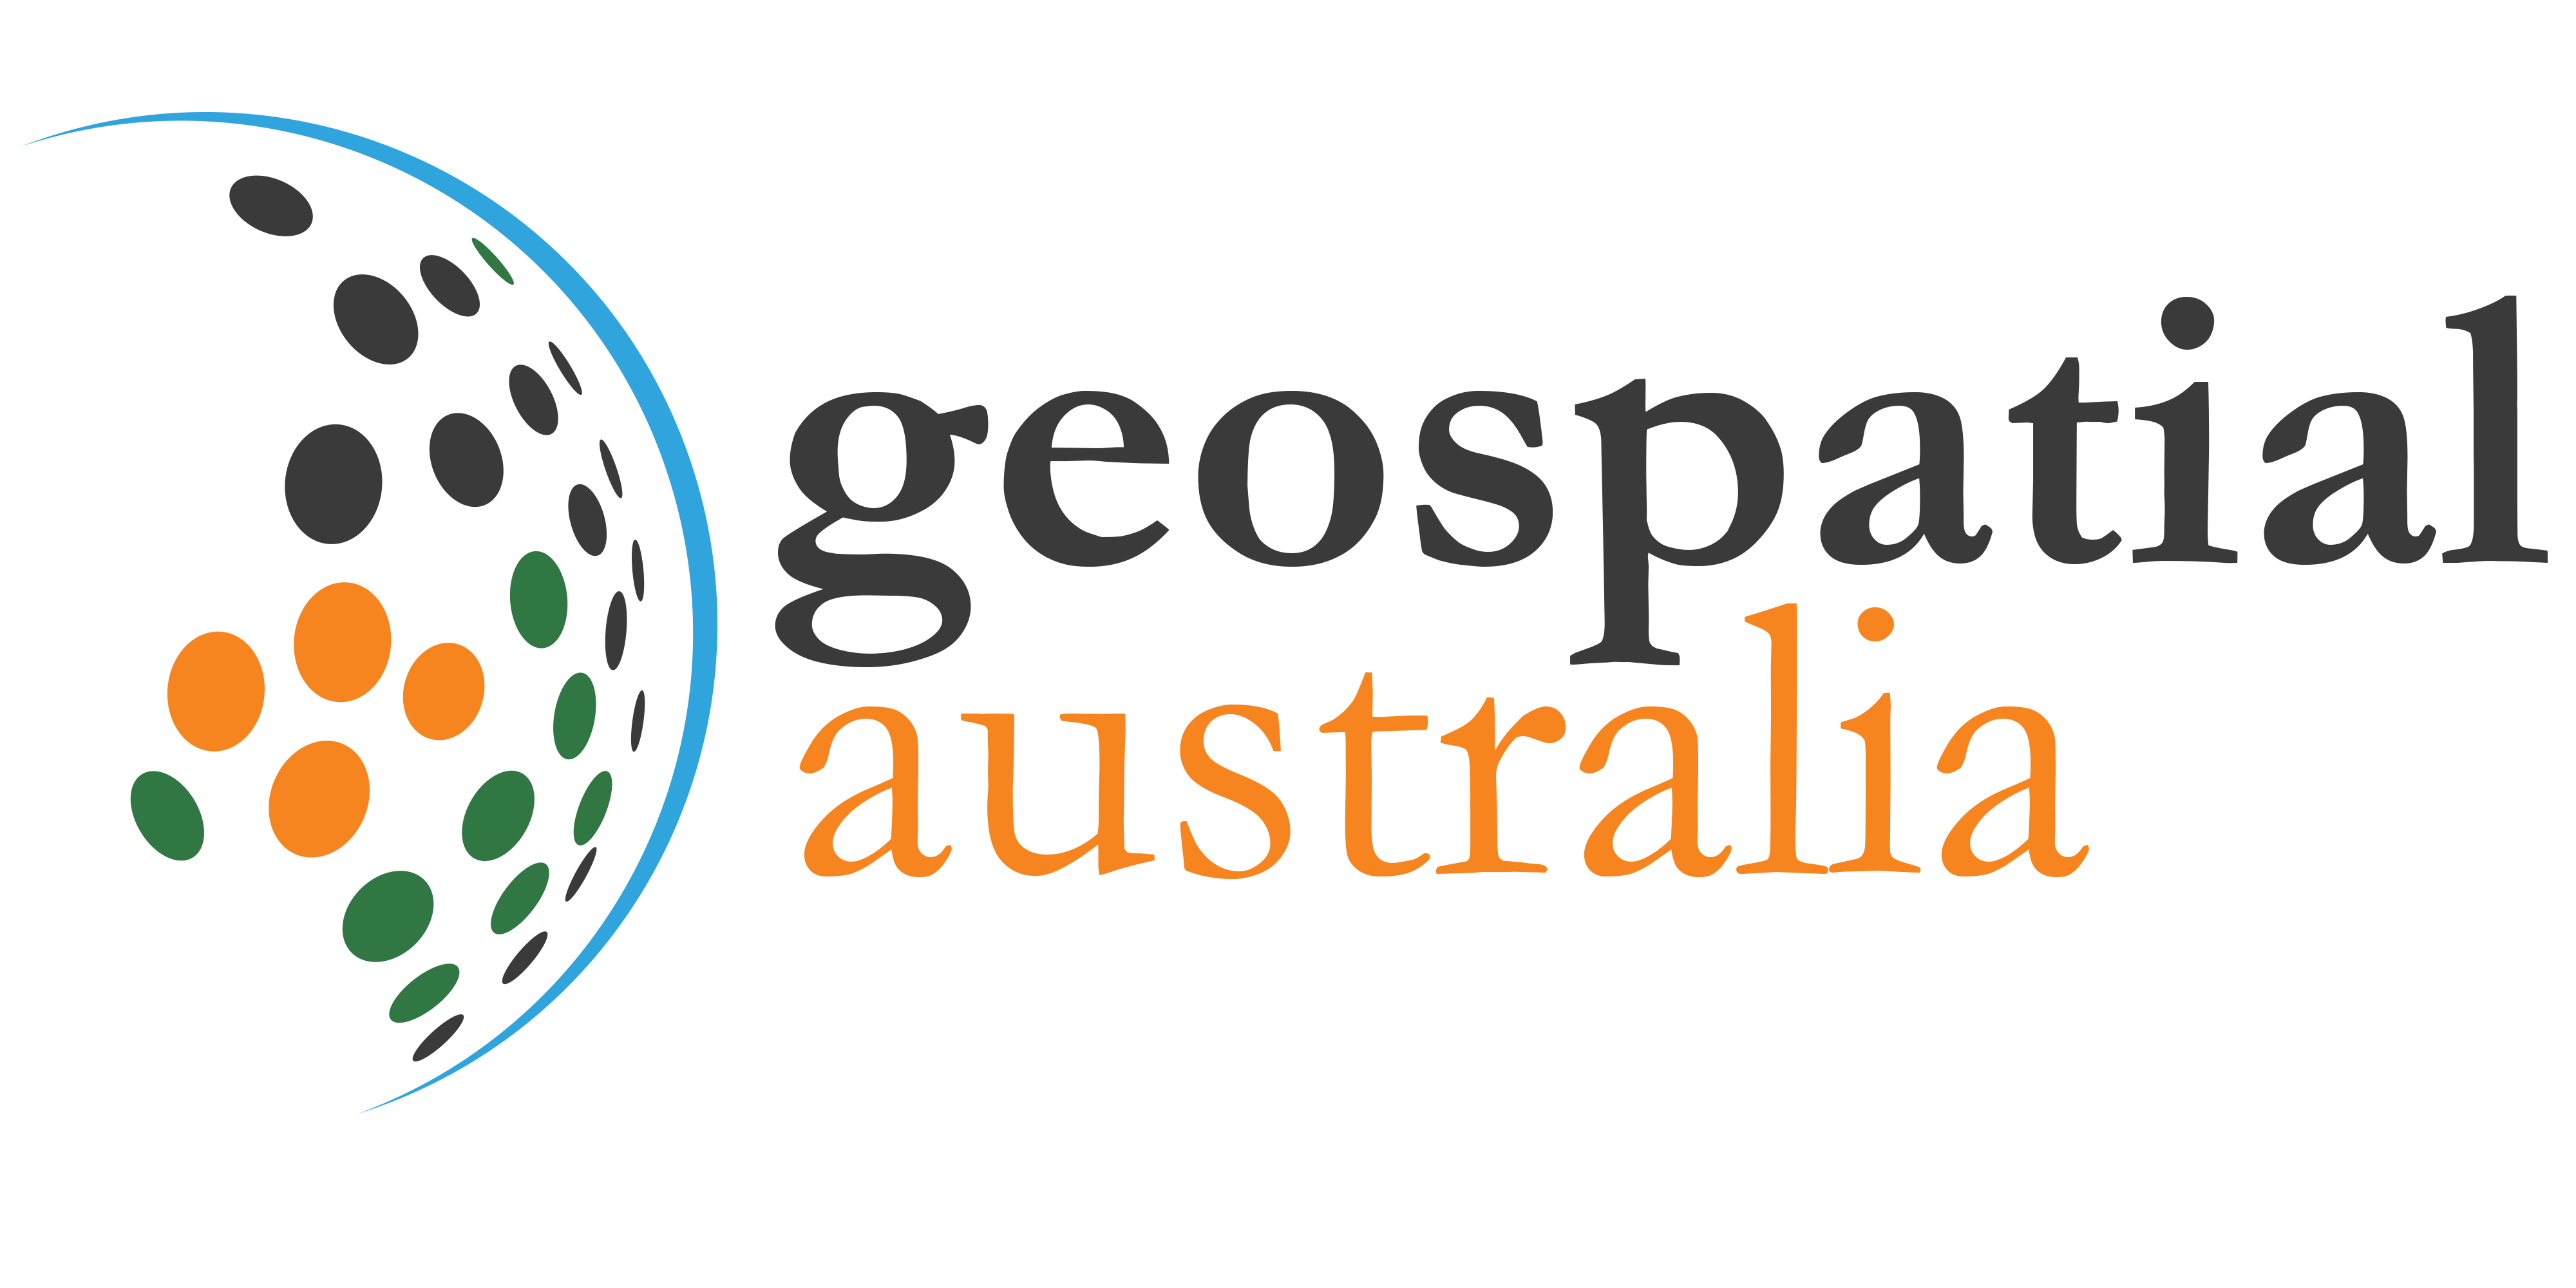 Geospatial Australia Logo